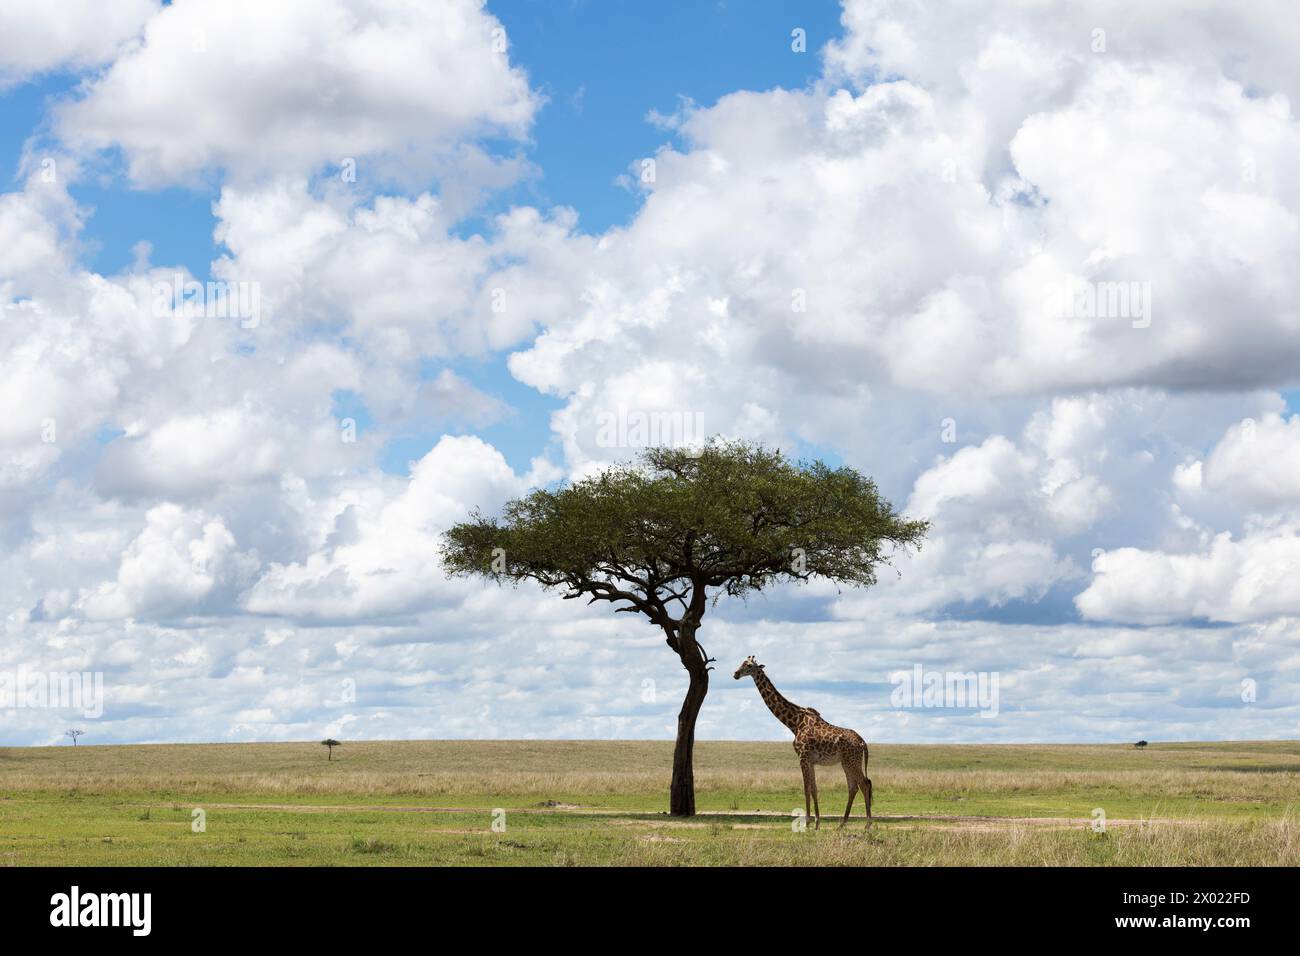 Girafe (Giraffa camelopardalis), Masai Mara, Kenya Banque D'Images